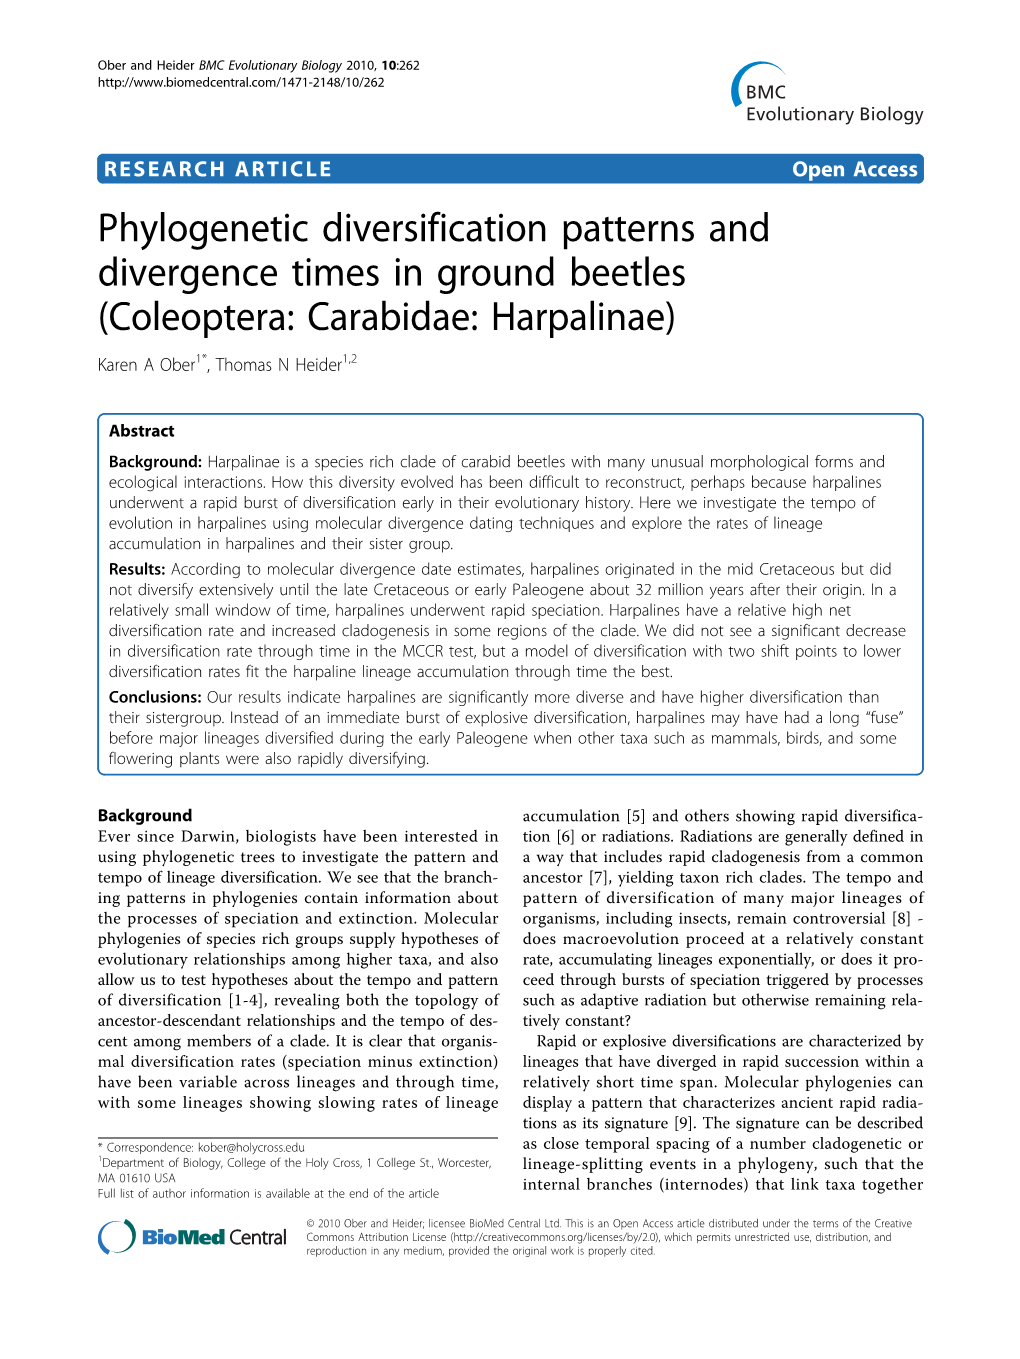 Phylogenetic Diversification Patterns and Divergence Times in Ground Beetles (Coleoptera: Carabidae: Harpalinae) Karen a Ober1*, Thomas N Heider1,2